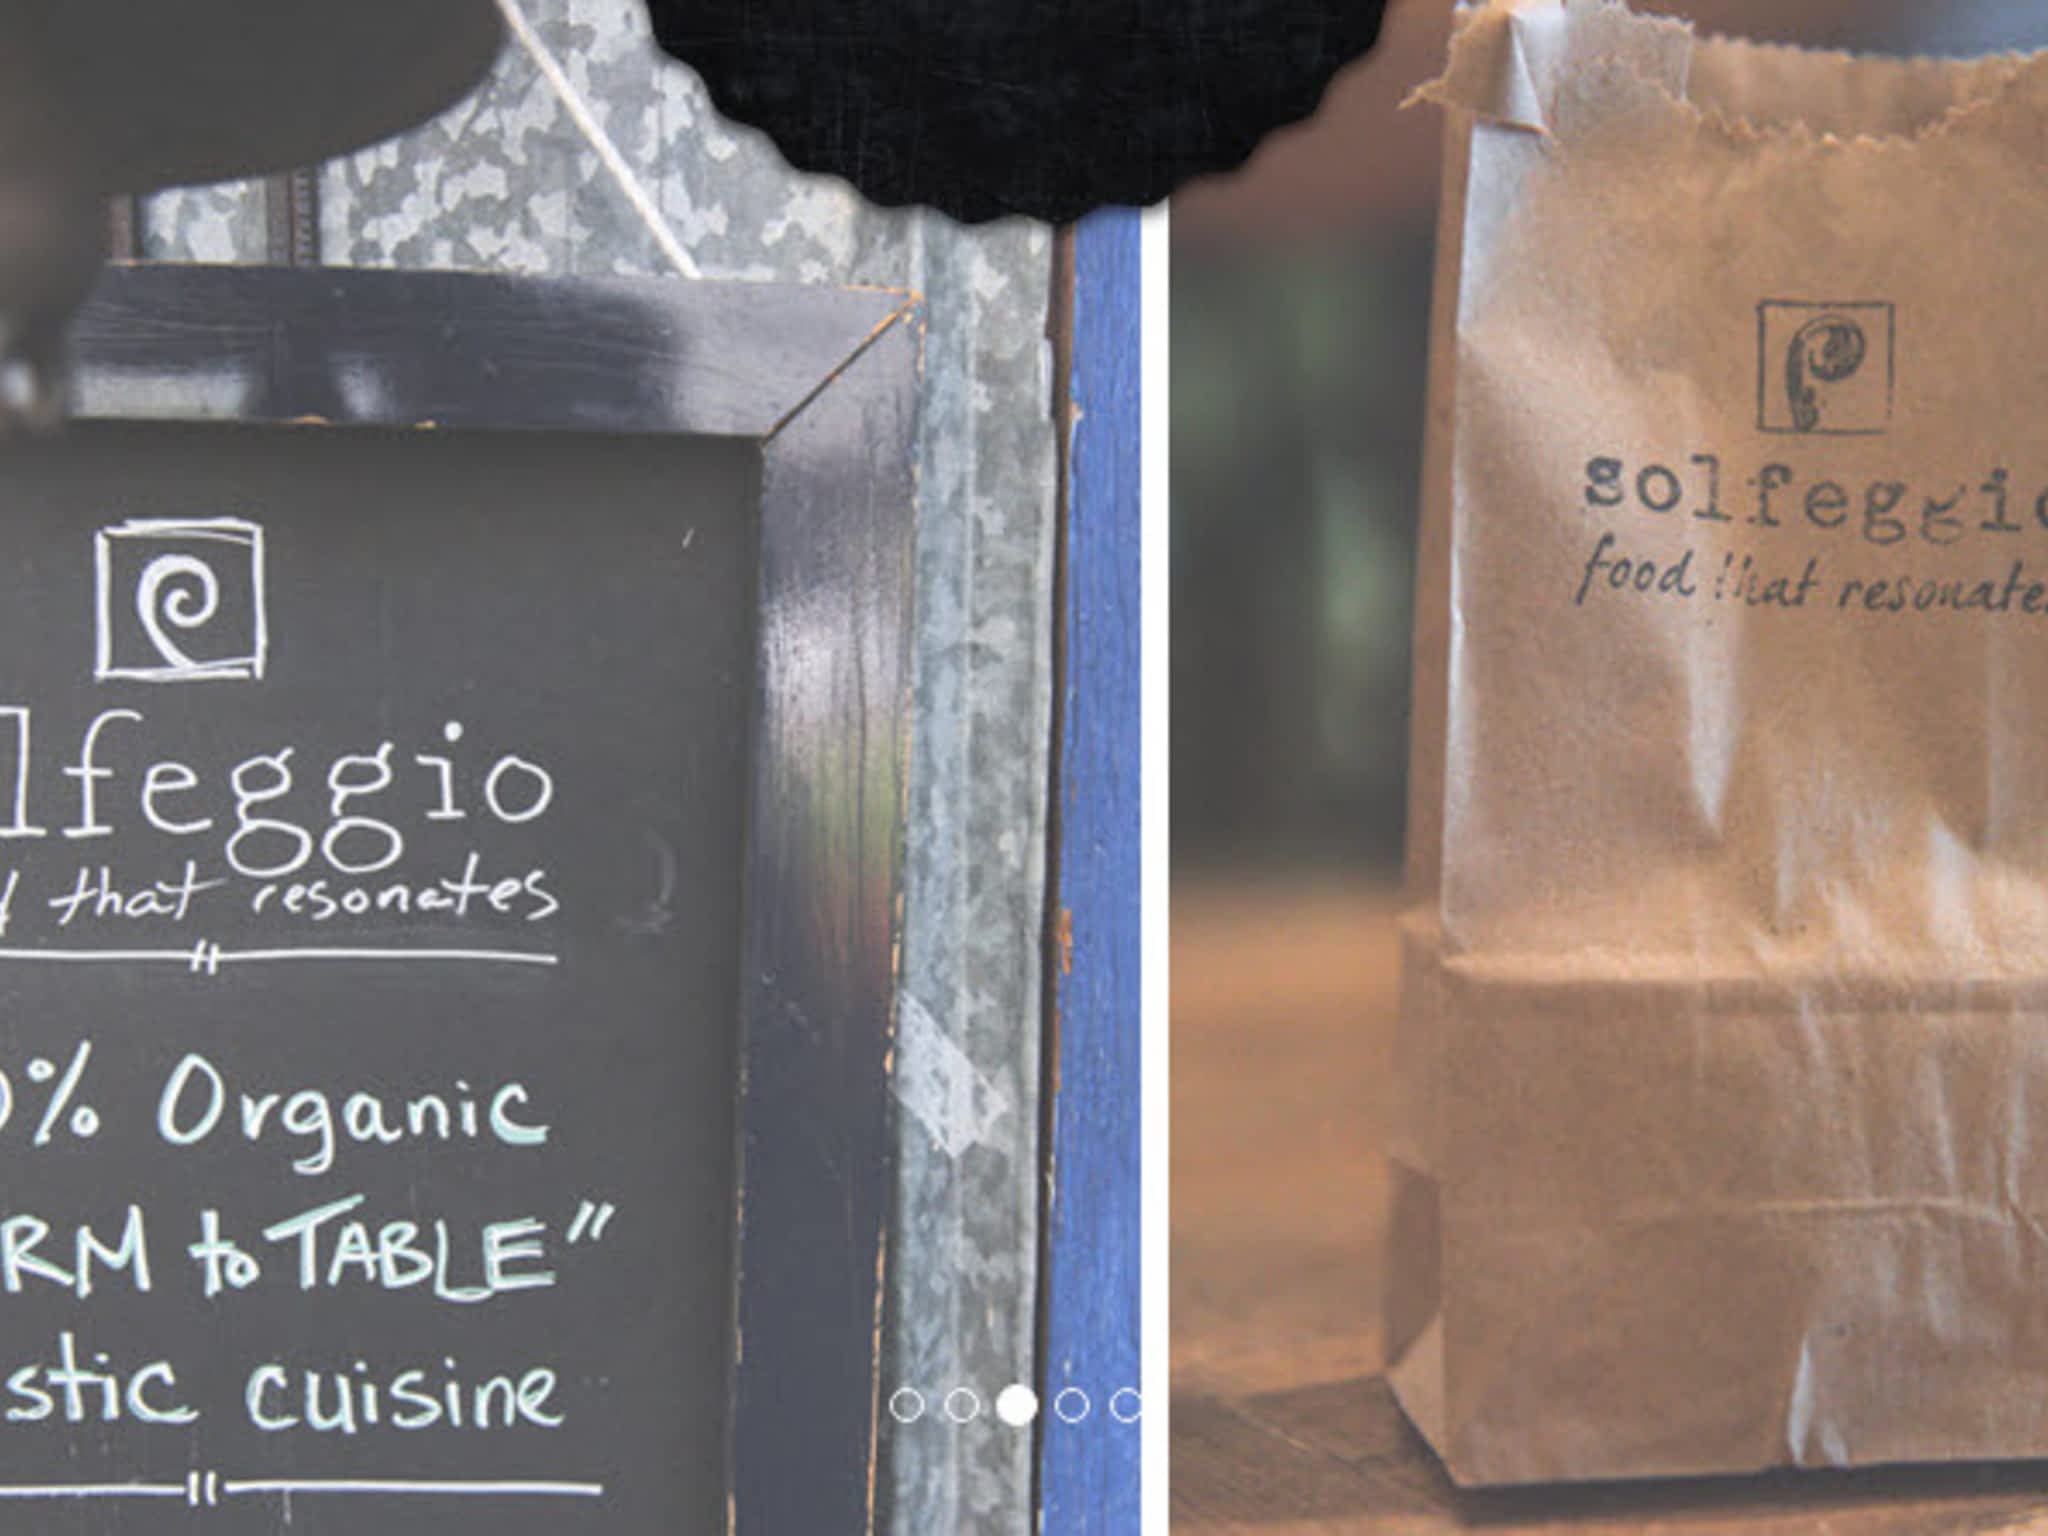 photo Solfeggio Whole Food Ltd